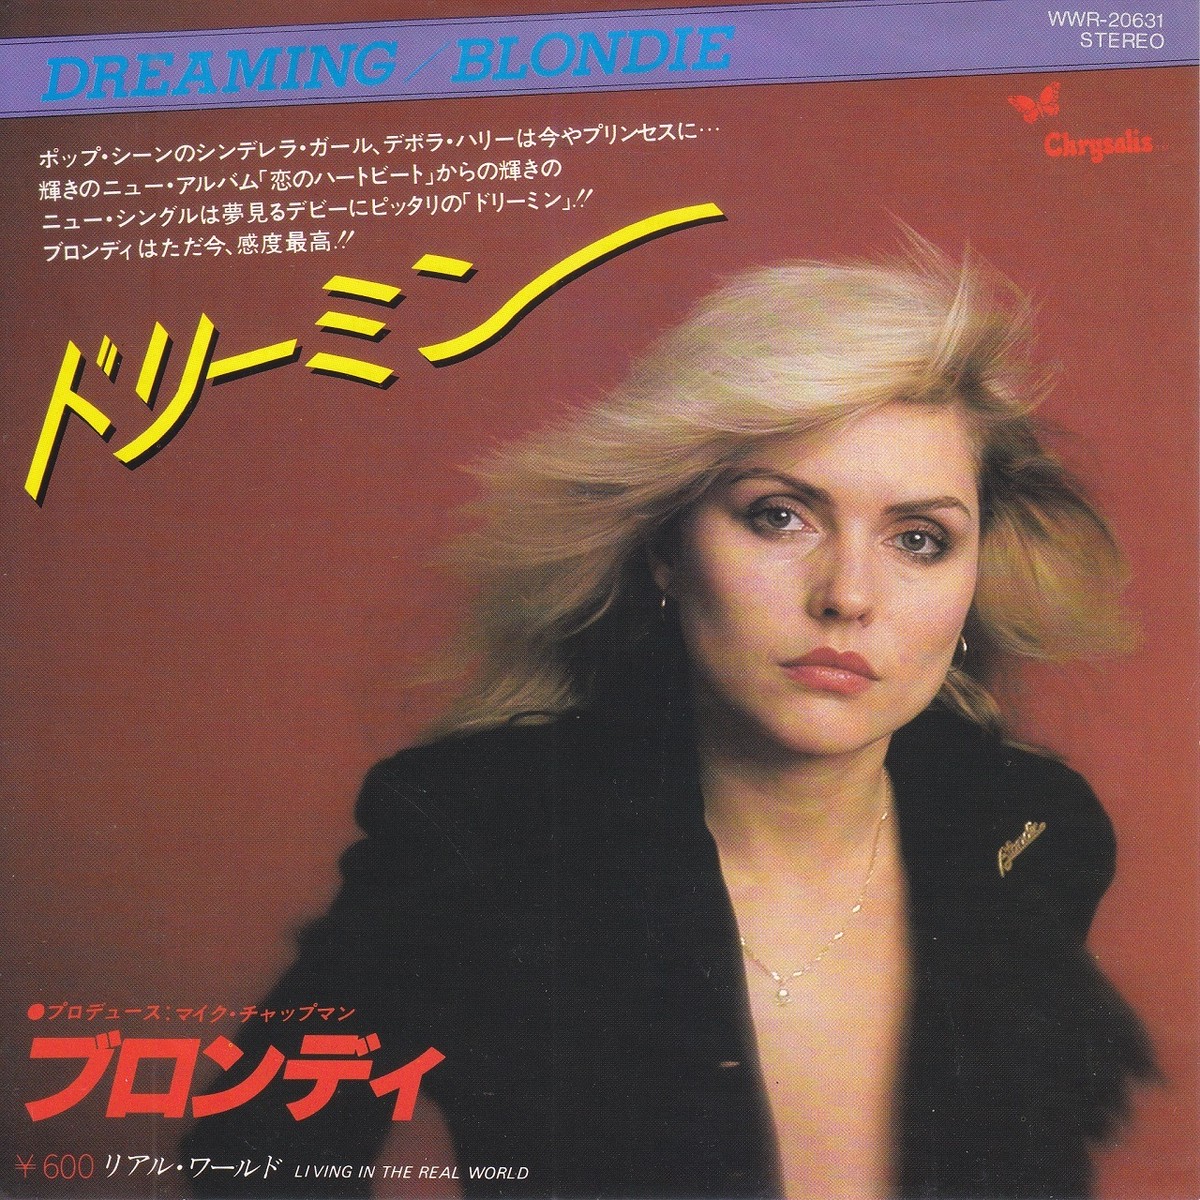 7inch Blondie Dreaming ドリーミン ブロンディ 1979 09 45rpm 45rpm